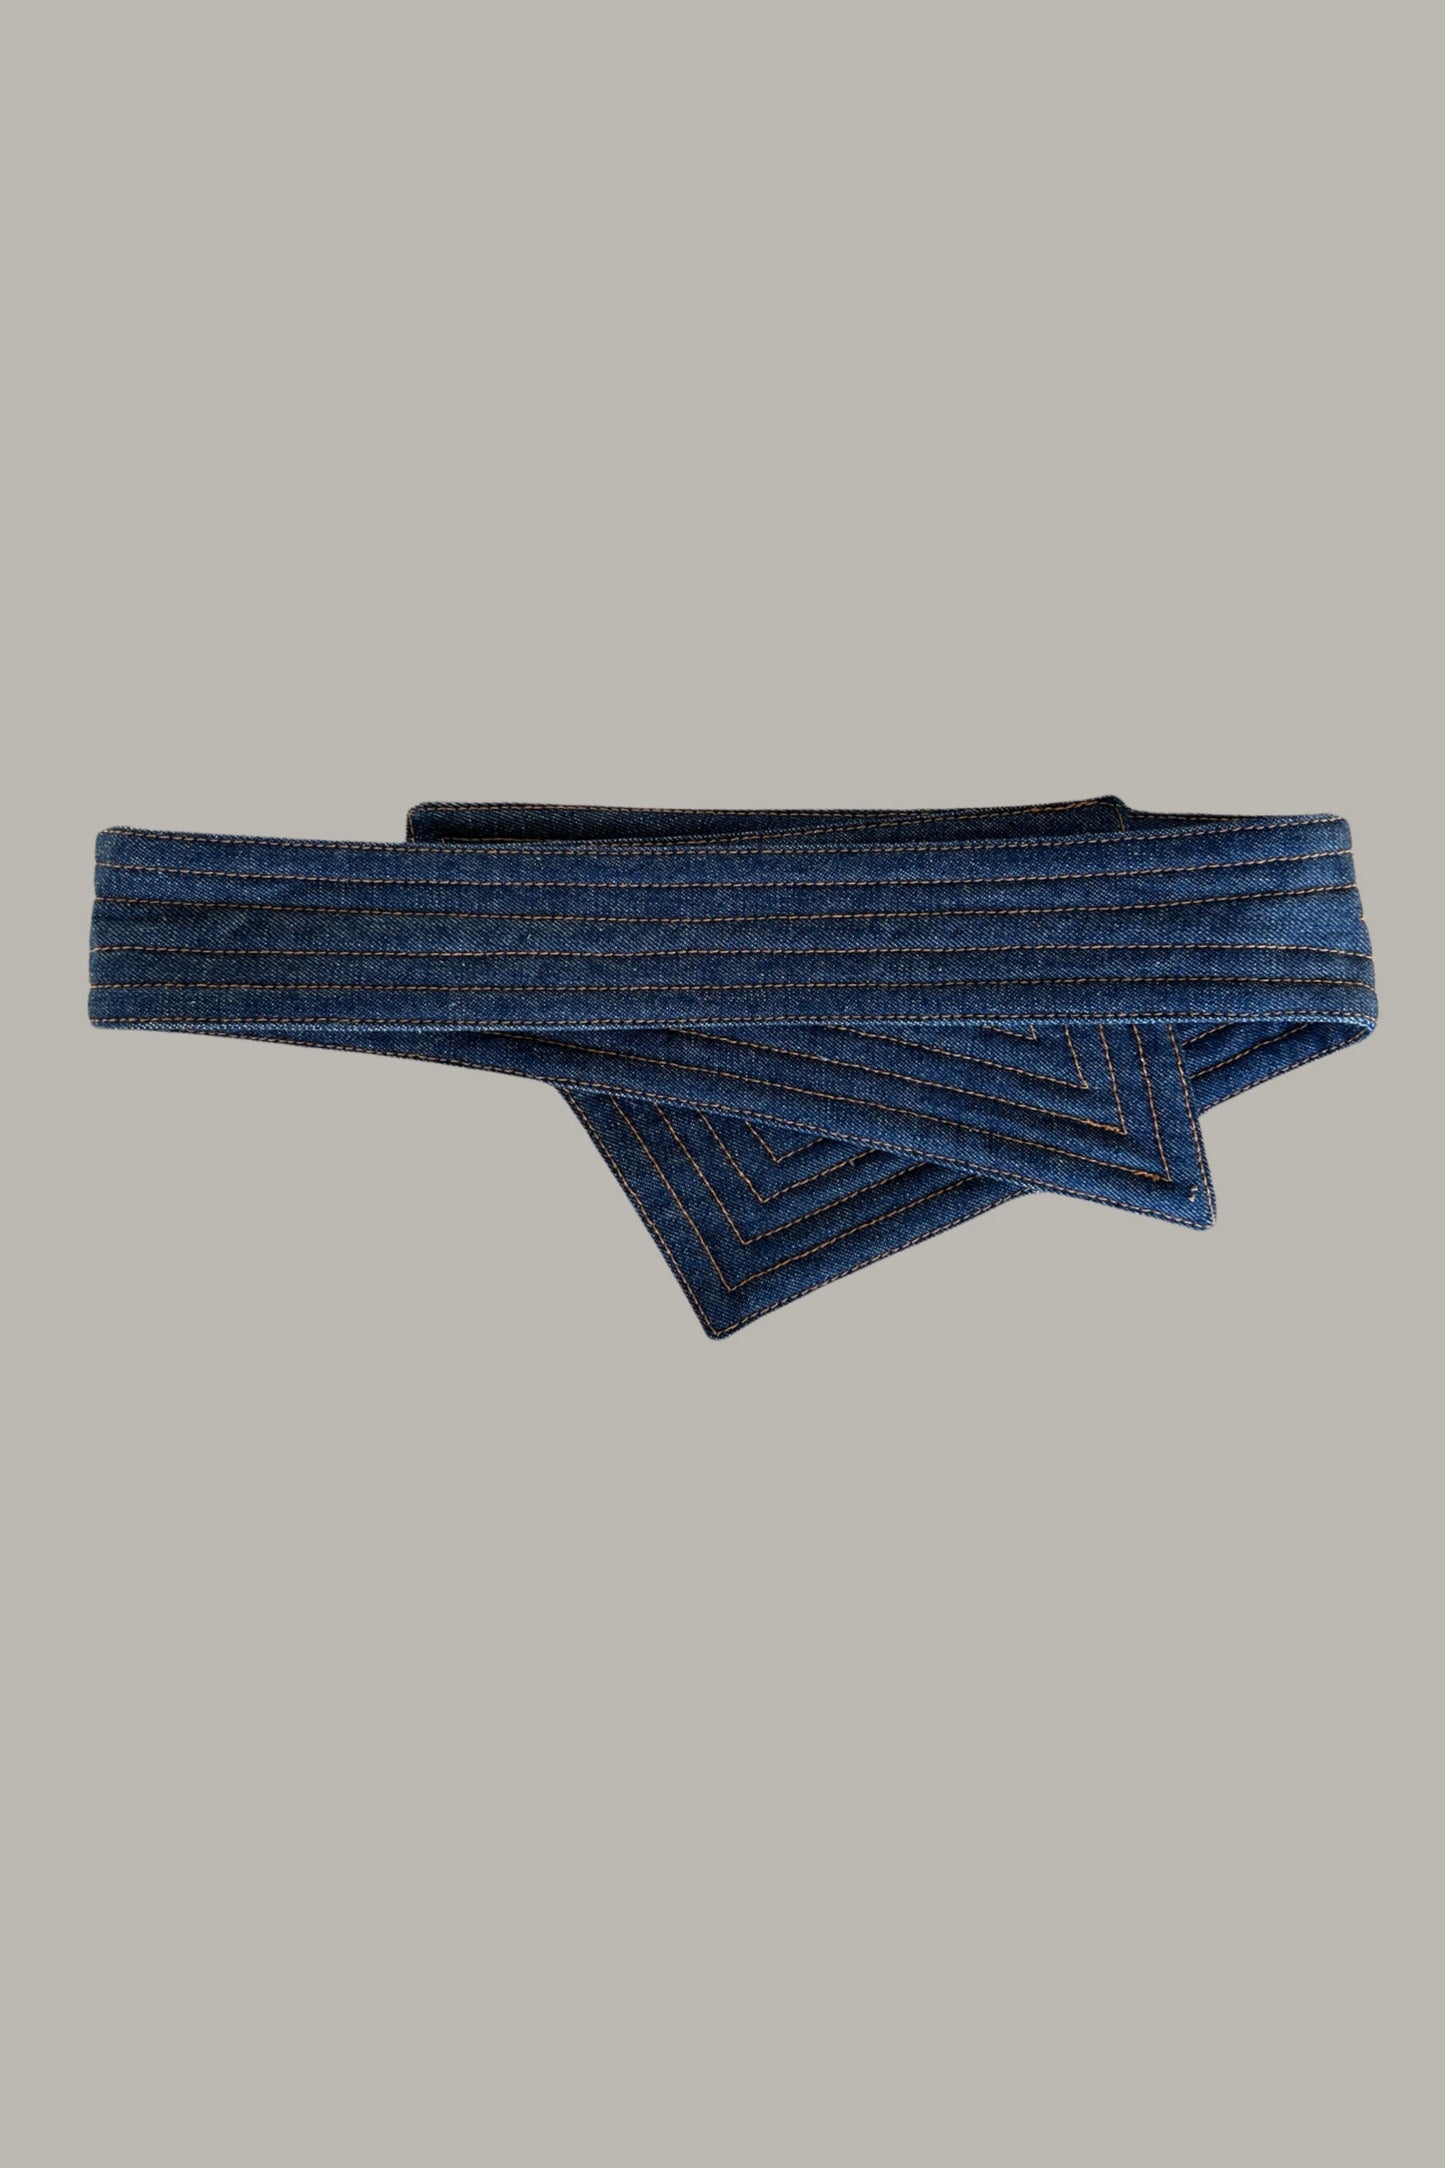 Reversible Asymmetrical Indigo Denim Belt in Oxide Blue